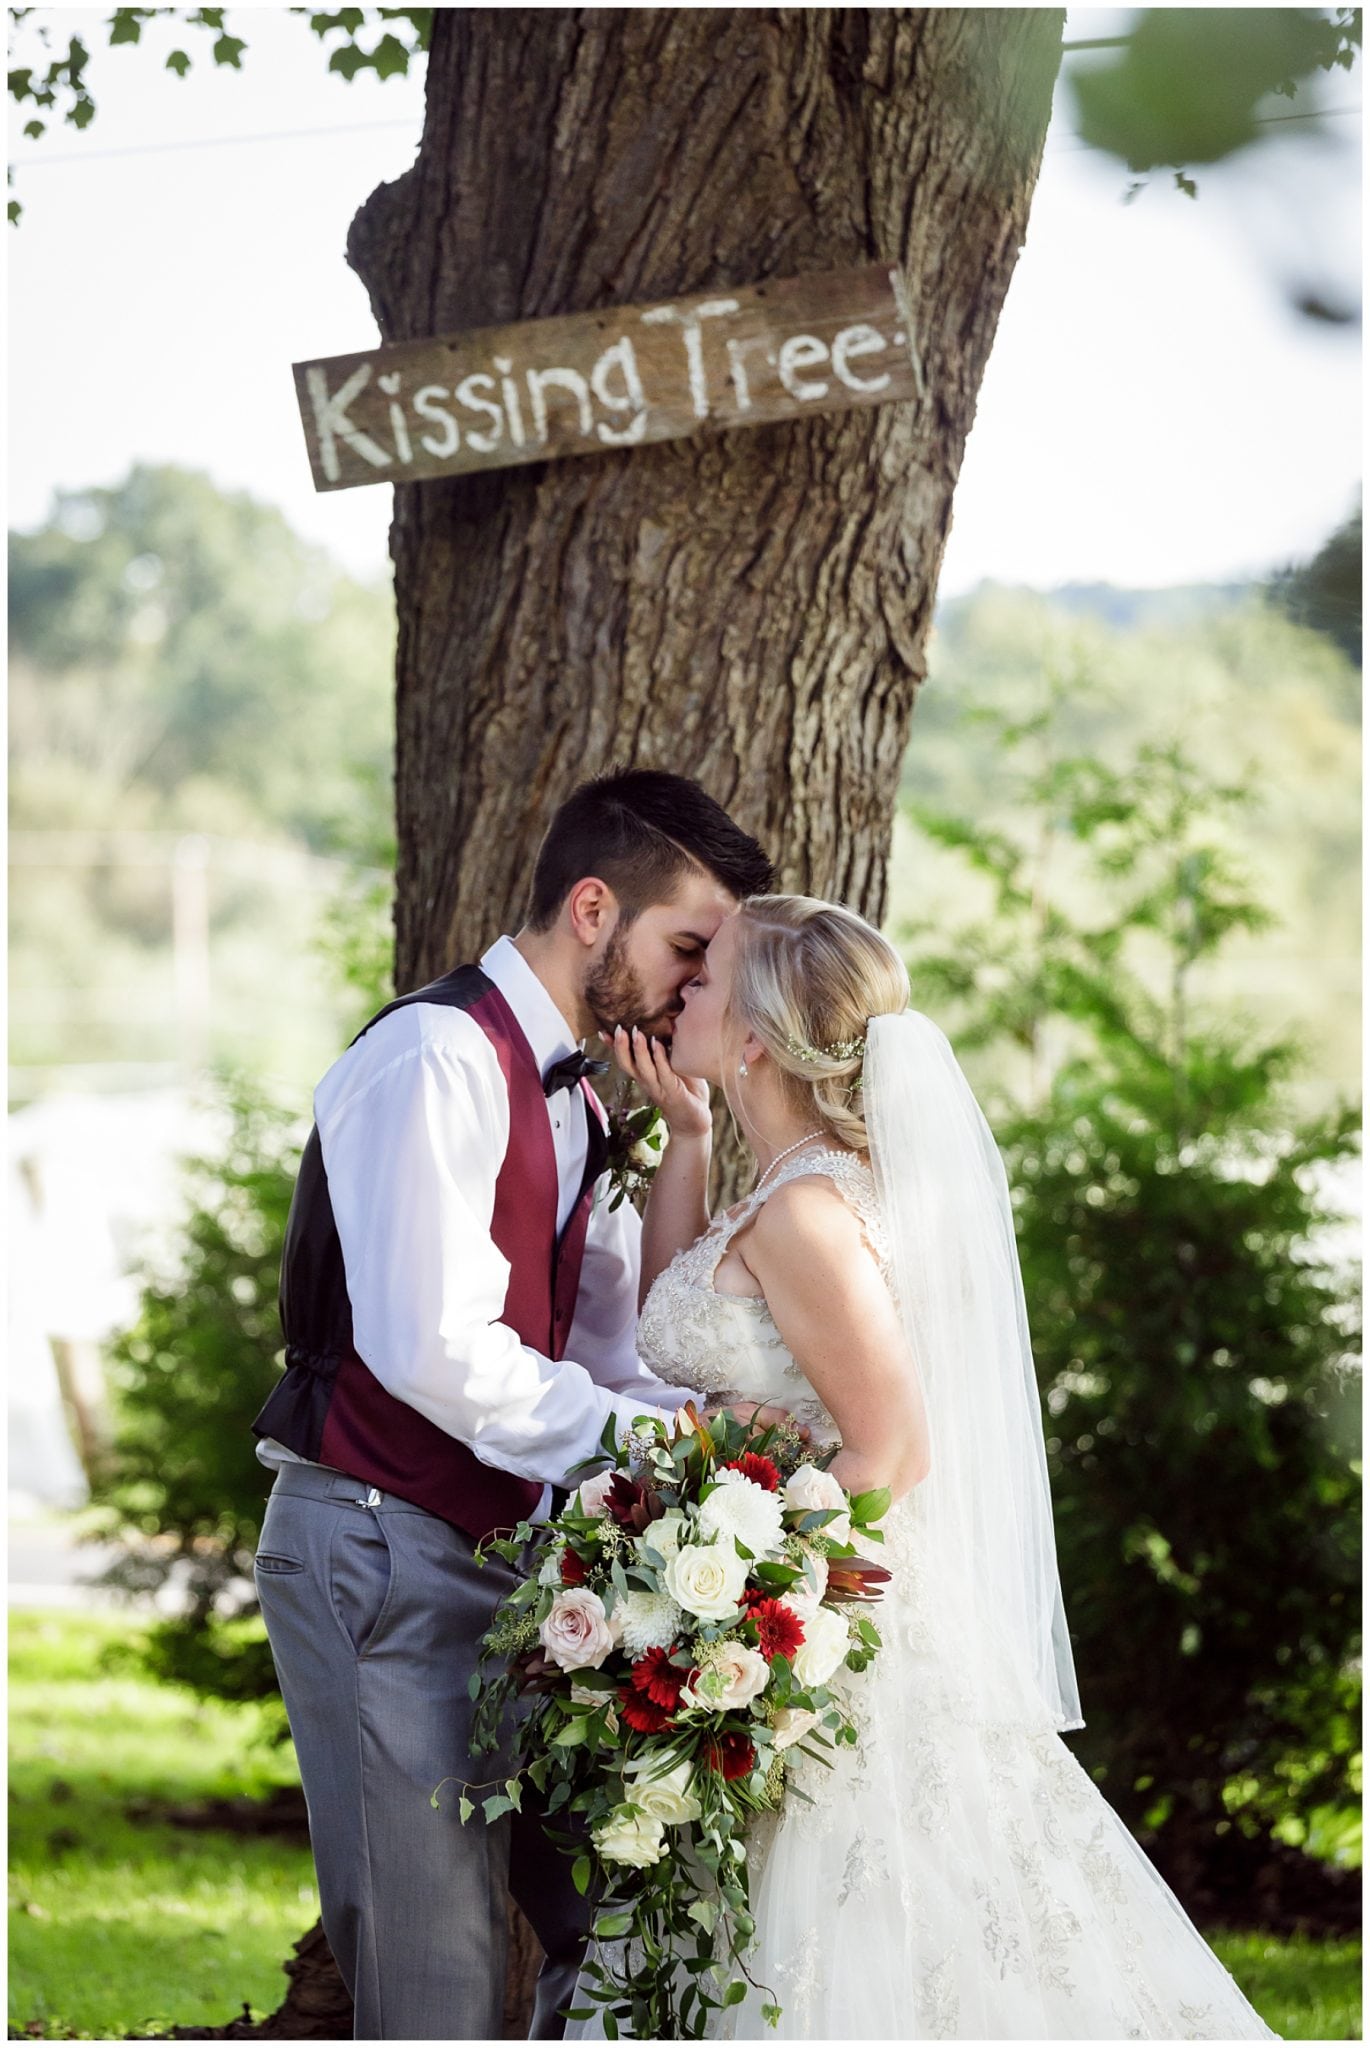 kissing tree shot at armstrong valley winery